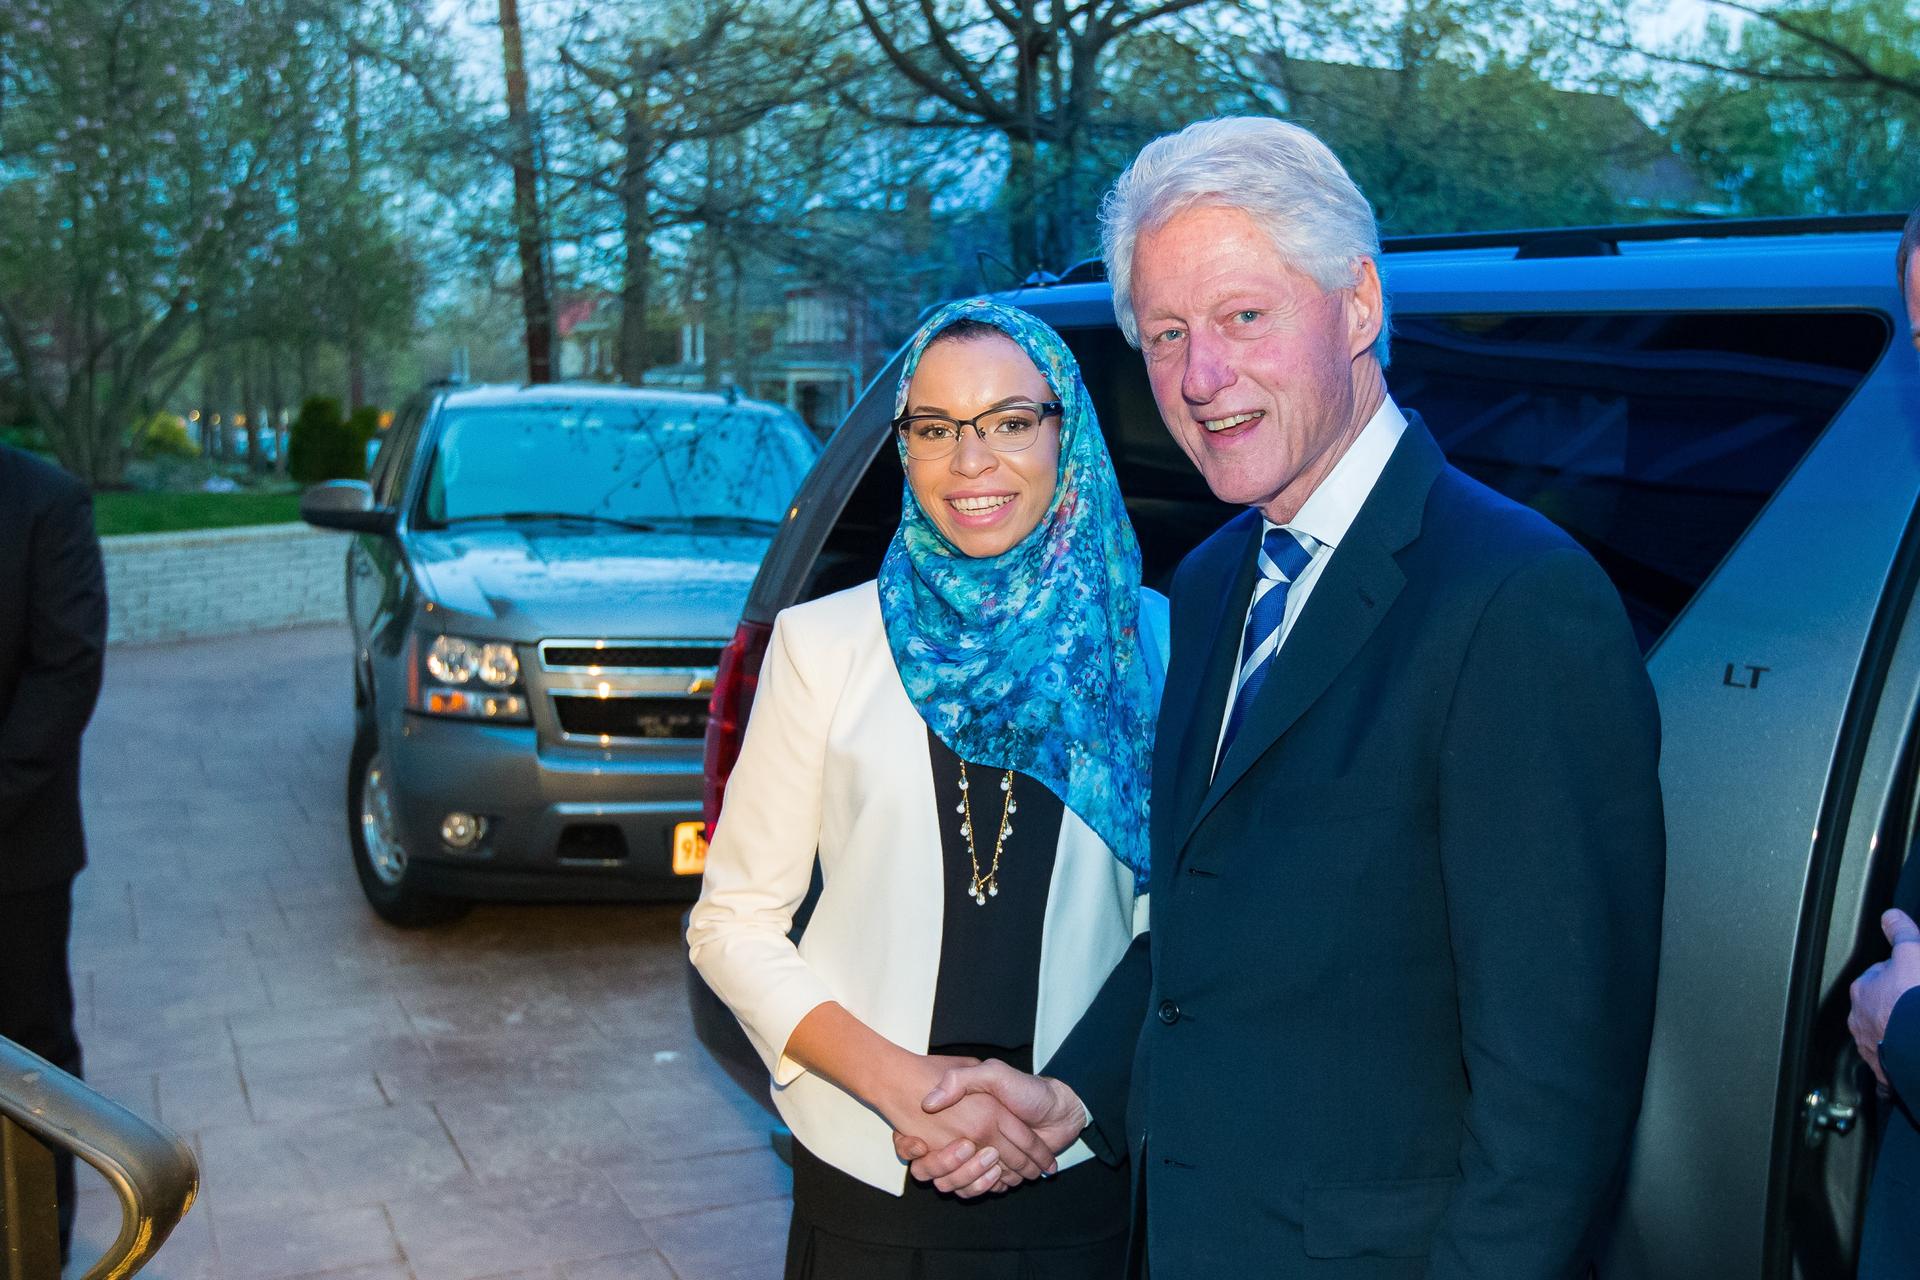 Blair Imani and Bill Clinton